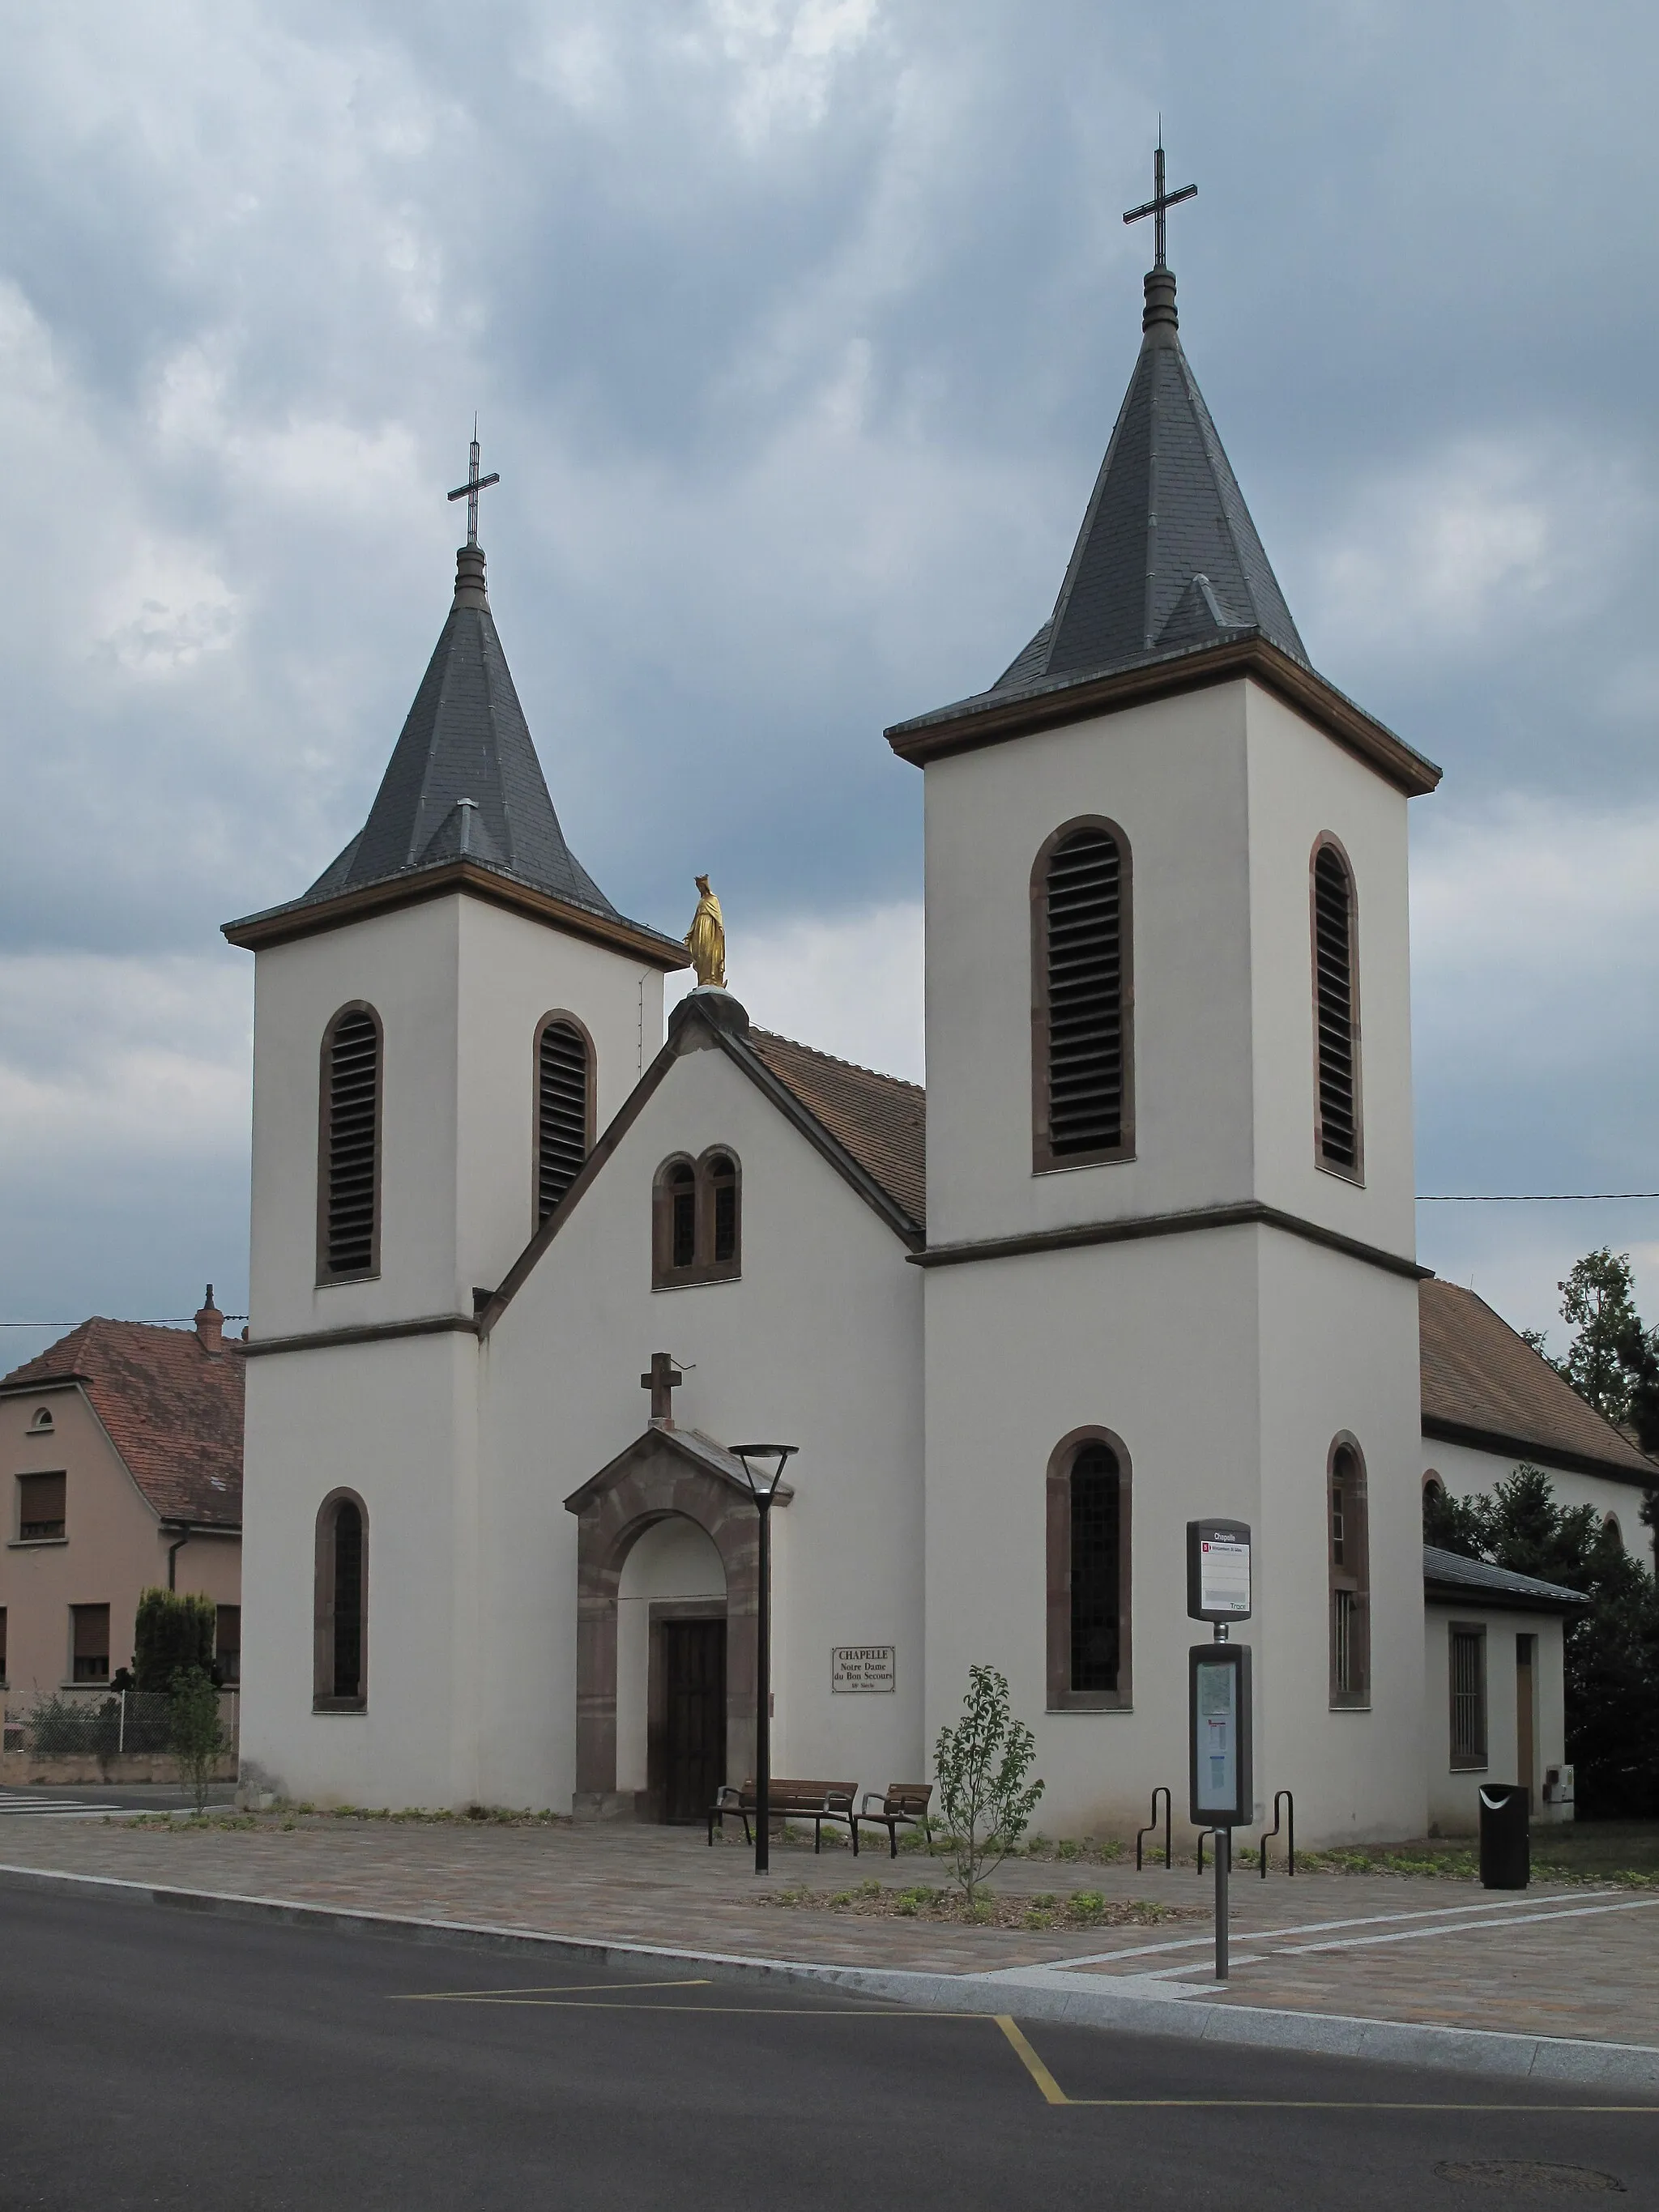 Image of Wintzenheim